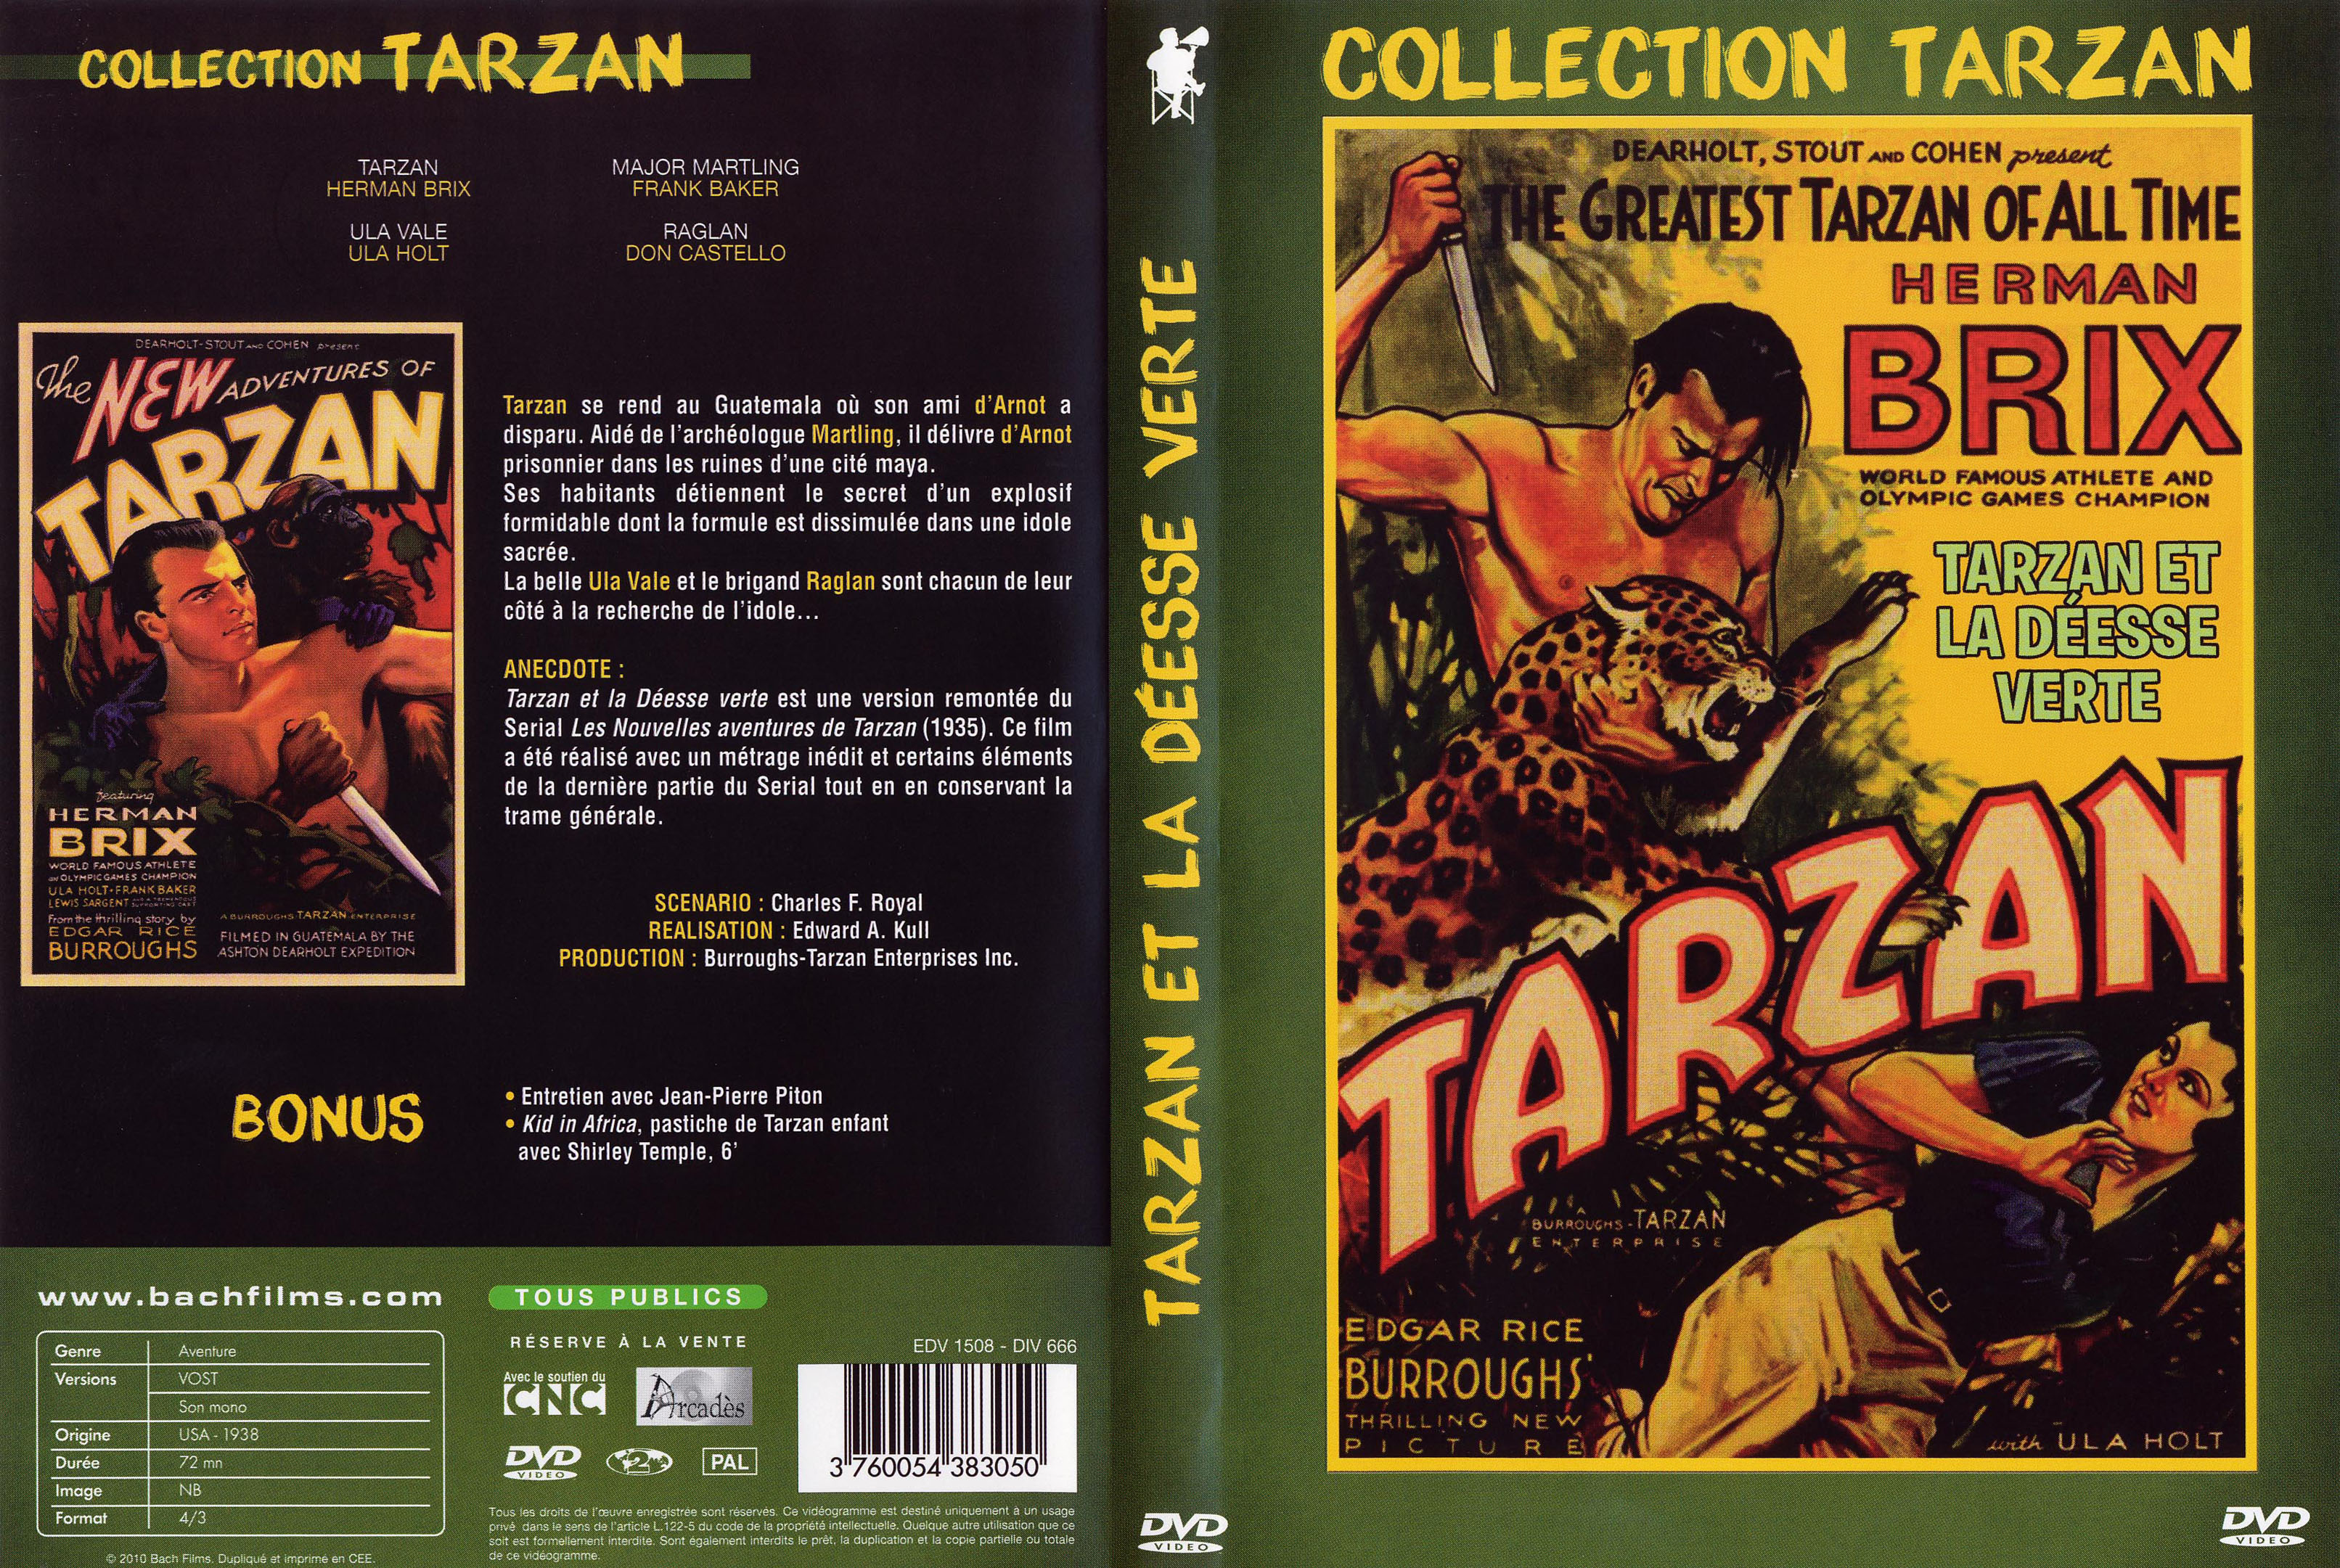 Jaquette DVD Tarzan et la desse verte